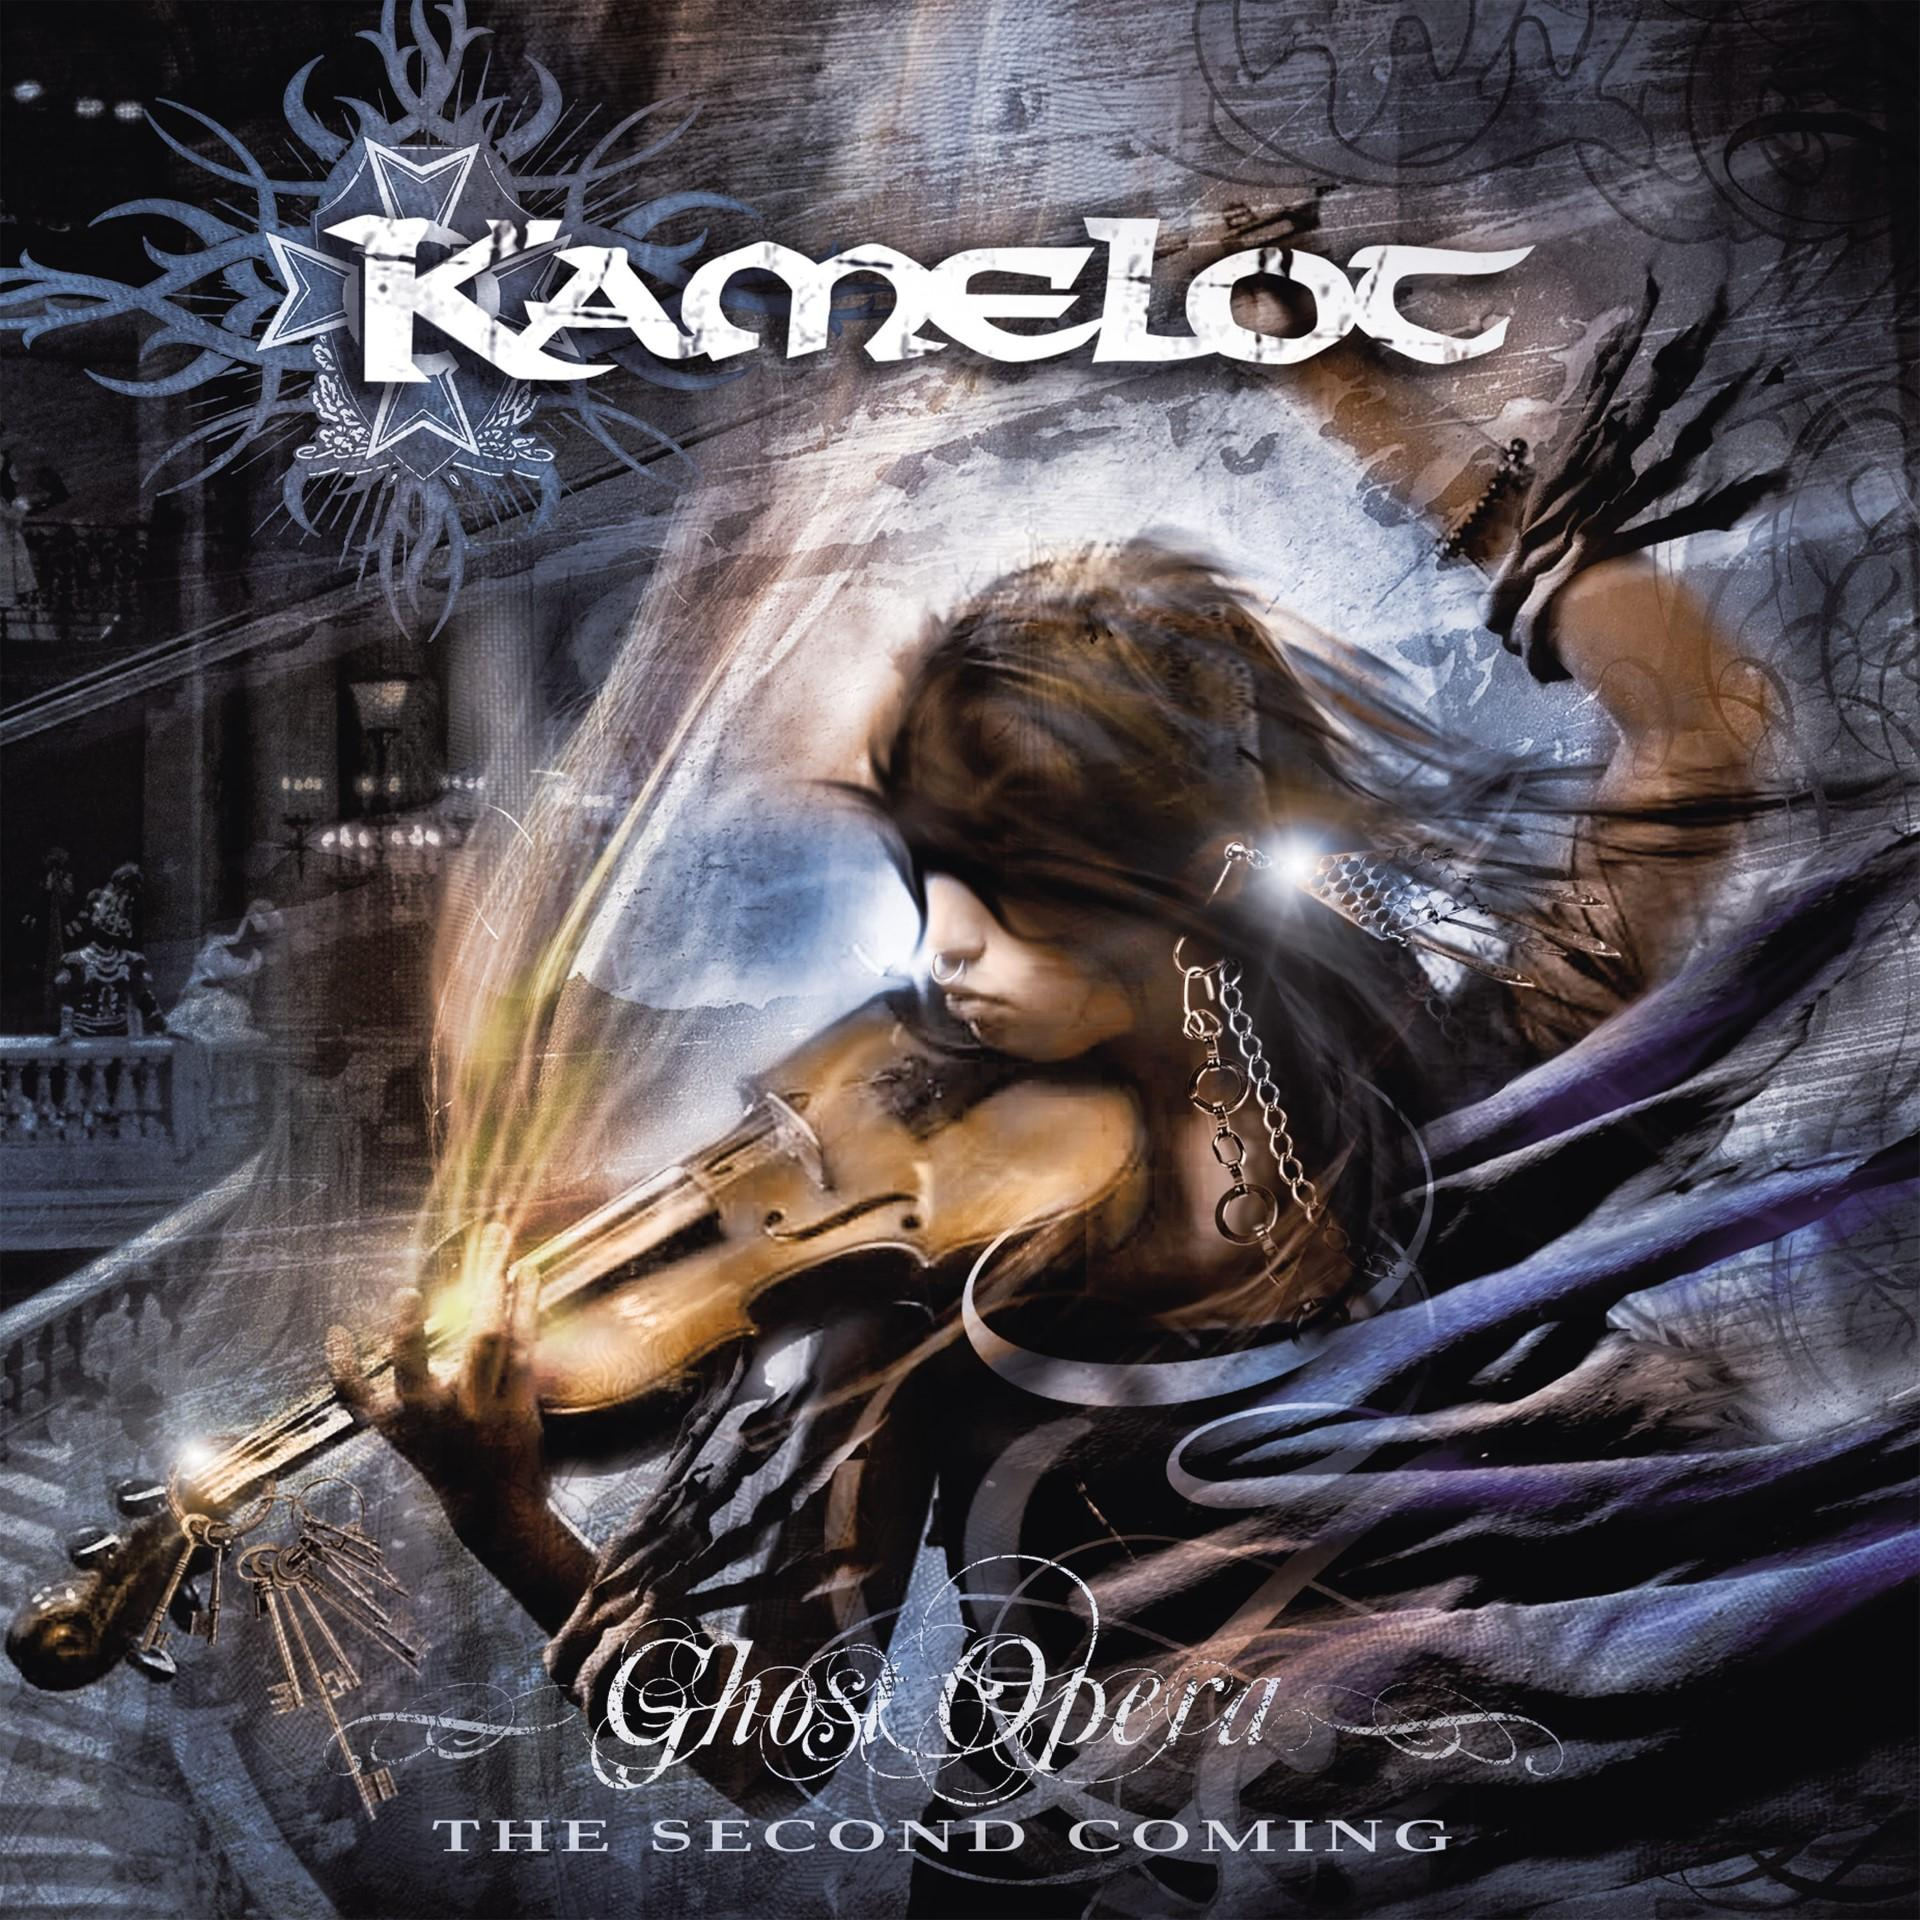 - The - Opera: Ghost Kamelot (Vinyl) Gatefold) Coming Second (LP